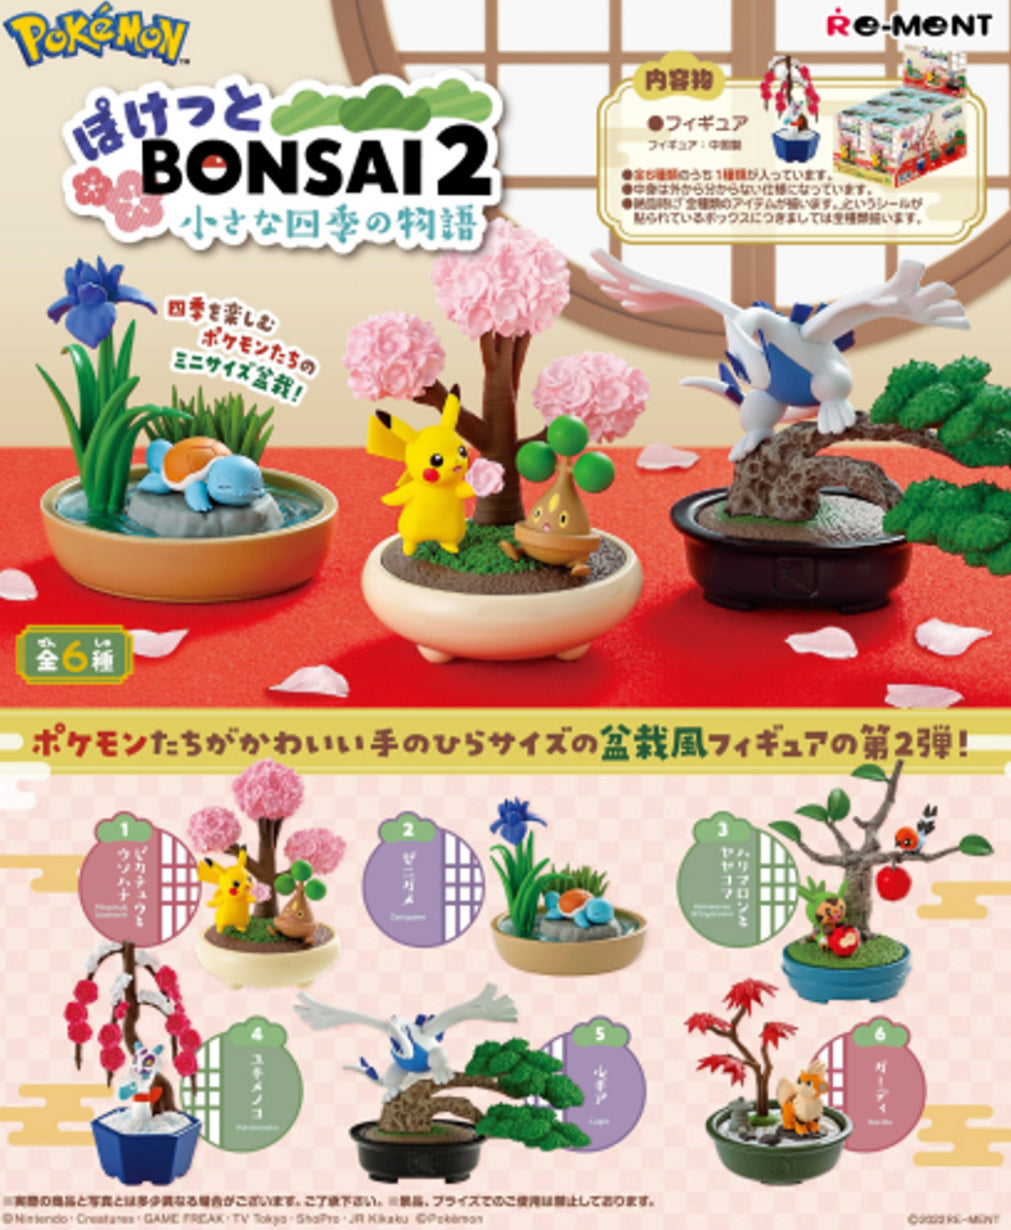 Re-ment Pokemon Pocket Bonsai2 Little Stories in 4 seasons